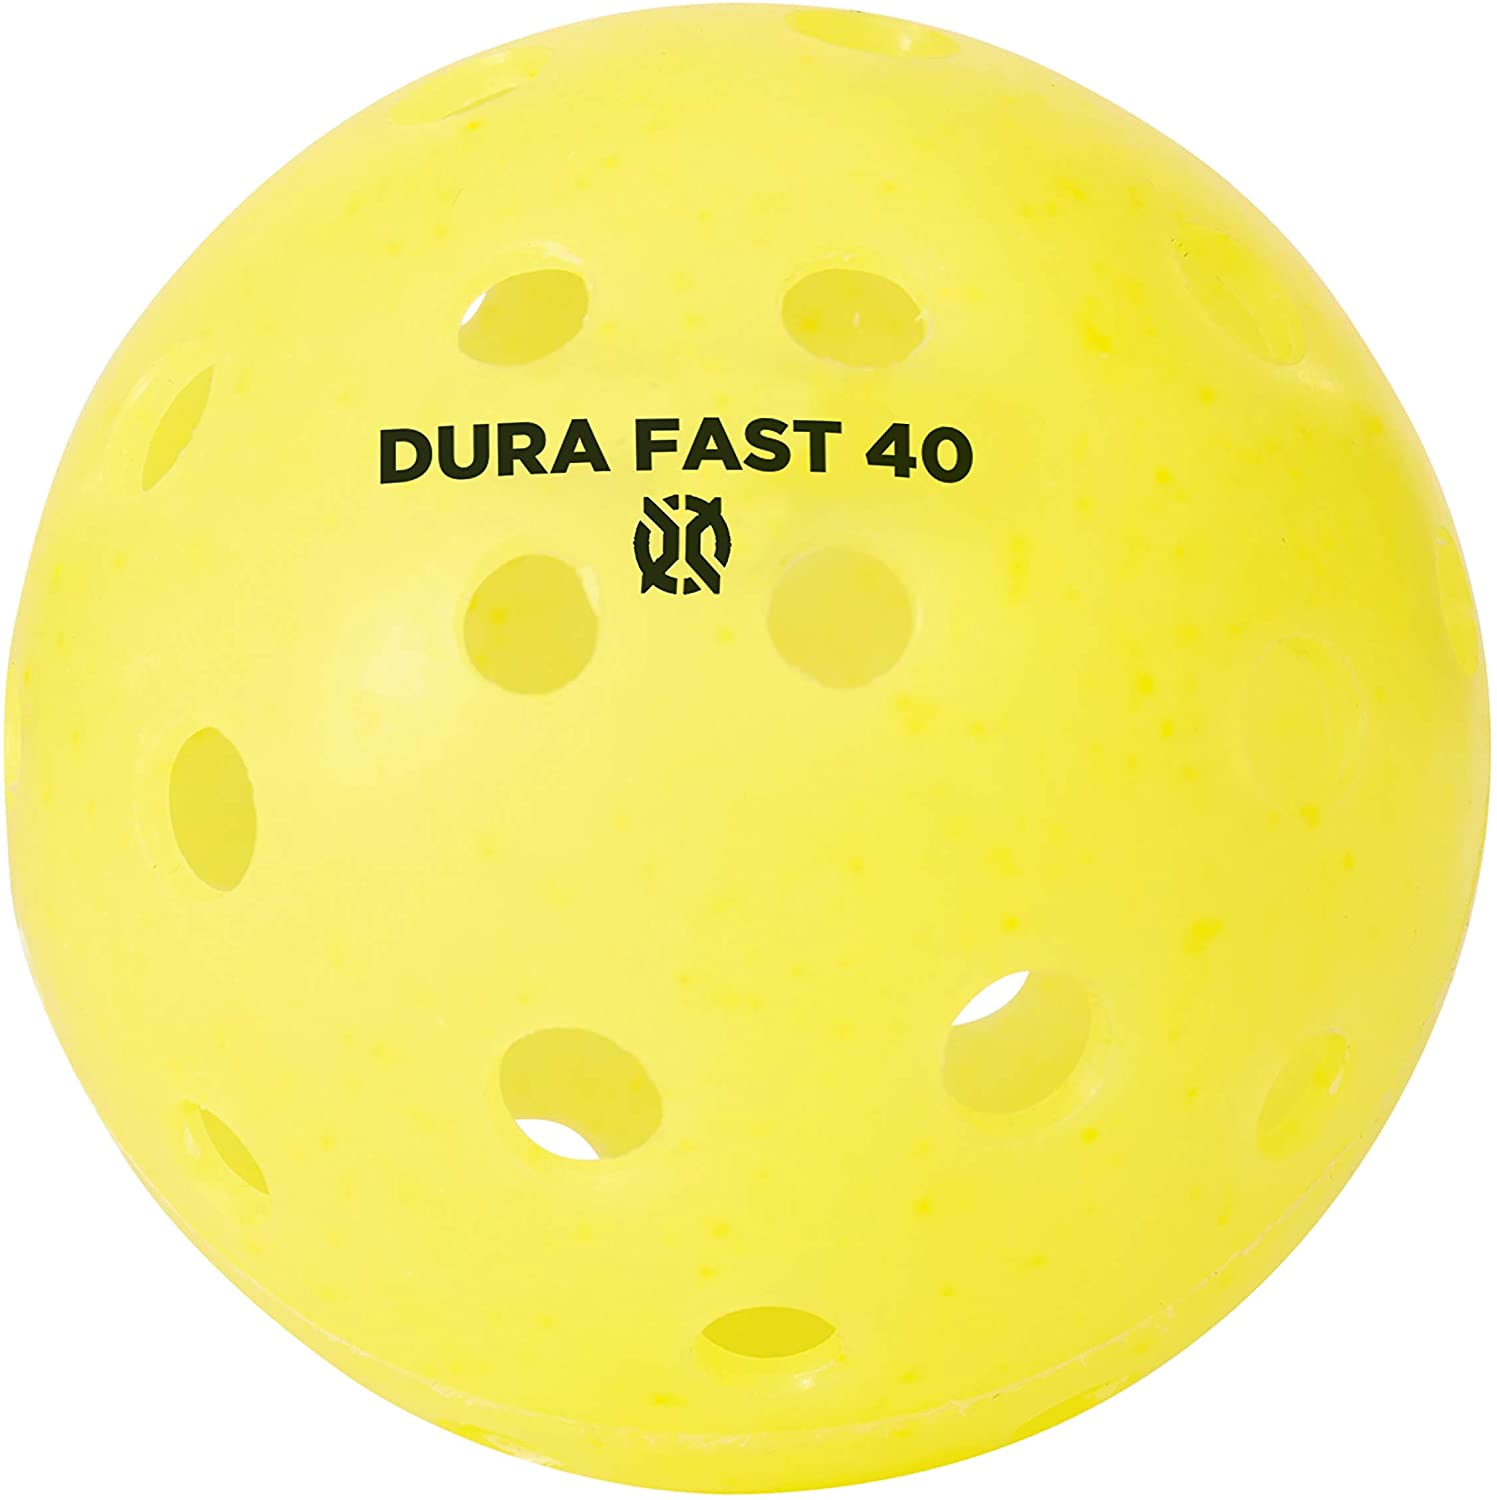 Dura Fast 40 Original Outdoor Pickleball Balls, 6-Pack